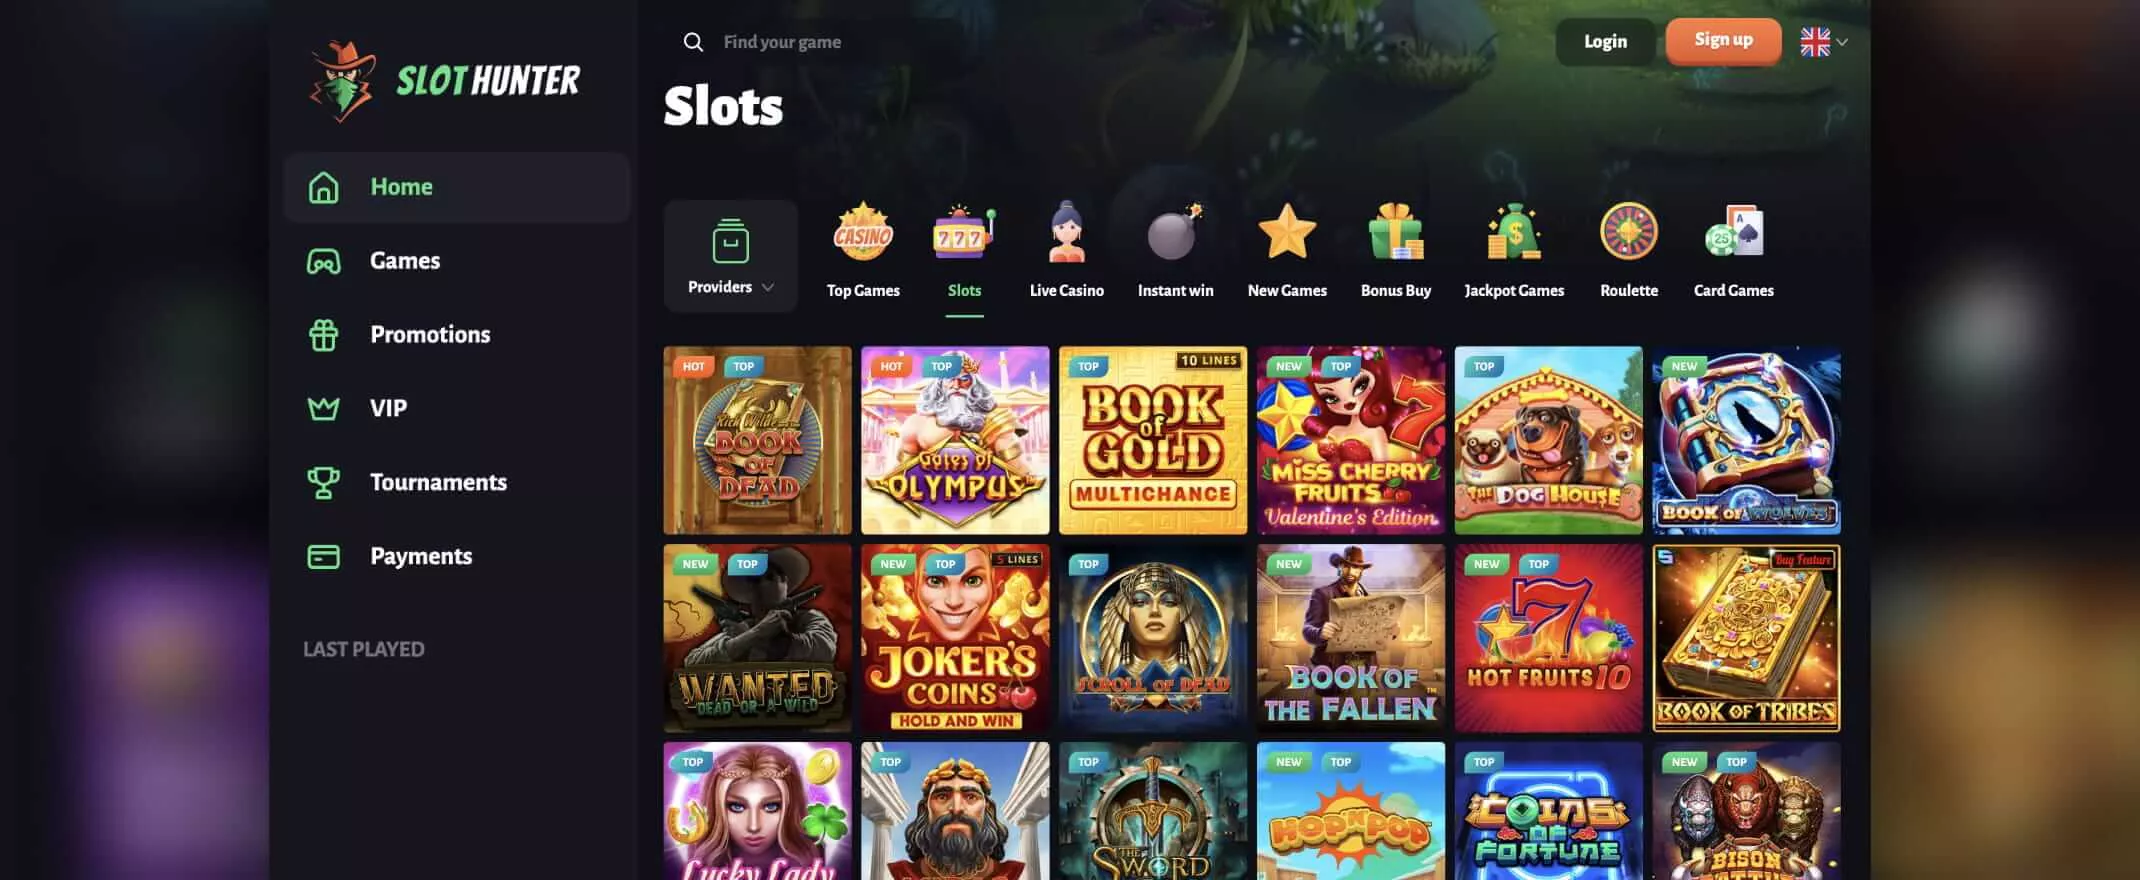 Slot Hunter Casino screenshot of the games